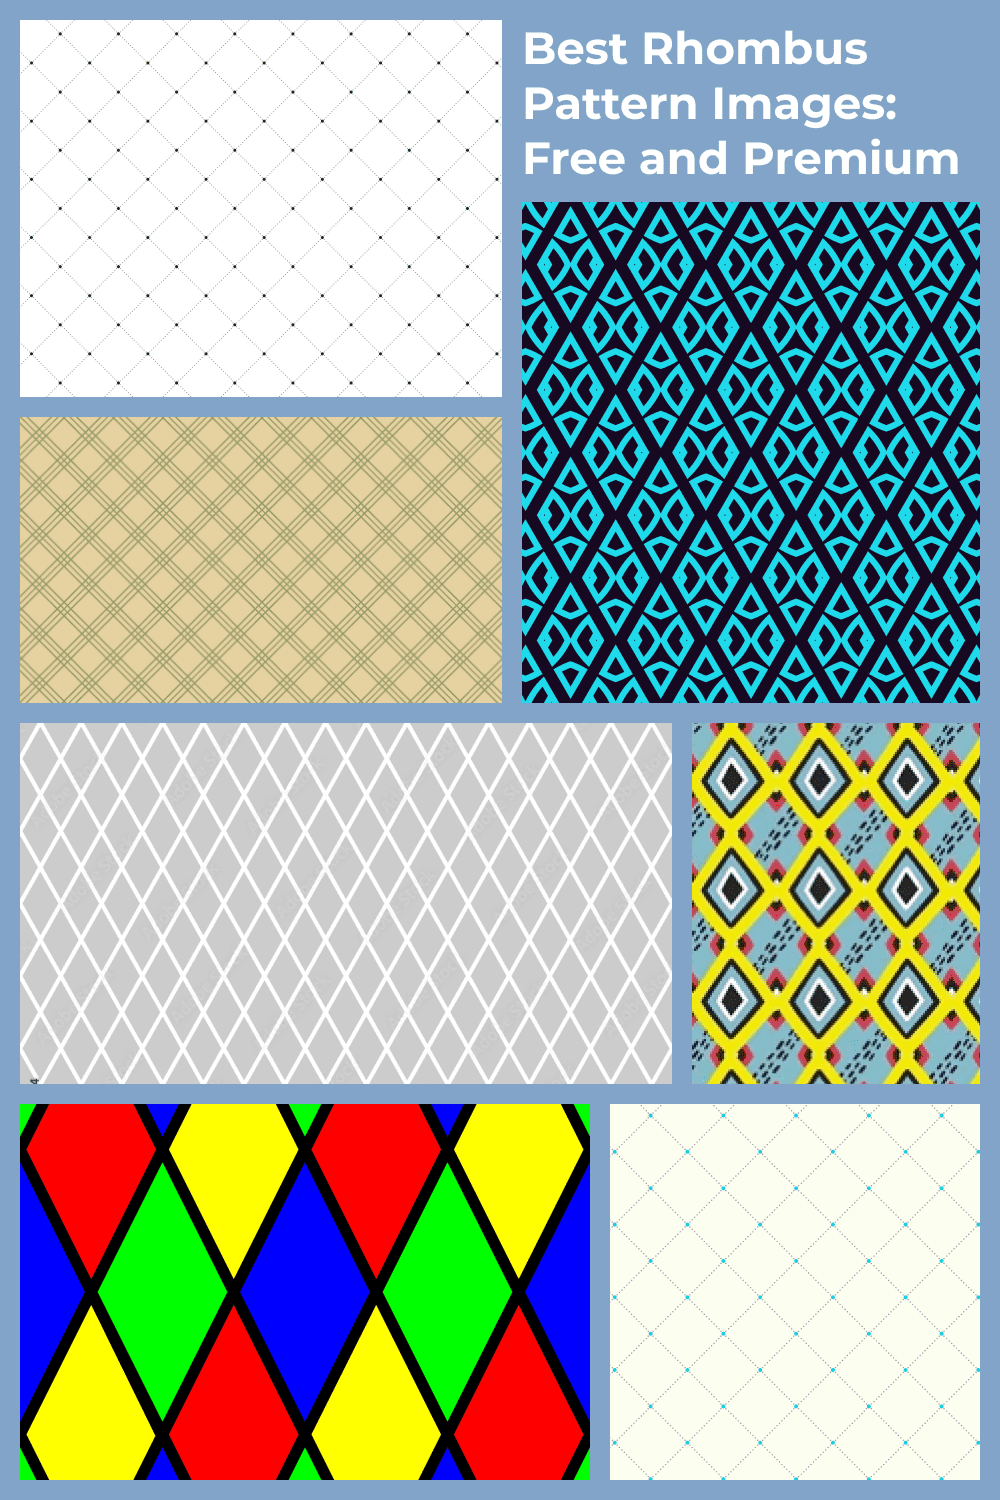 Rhombus Pattern Pinterest.